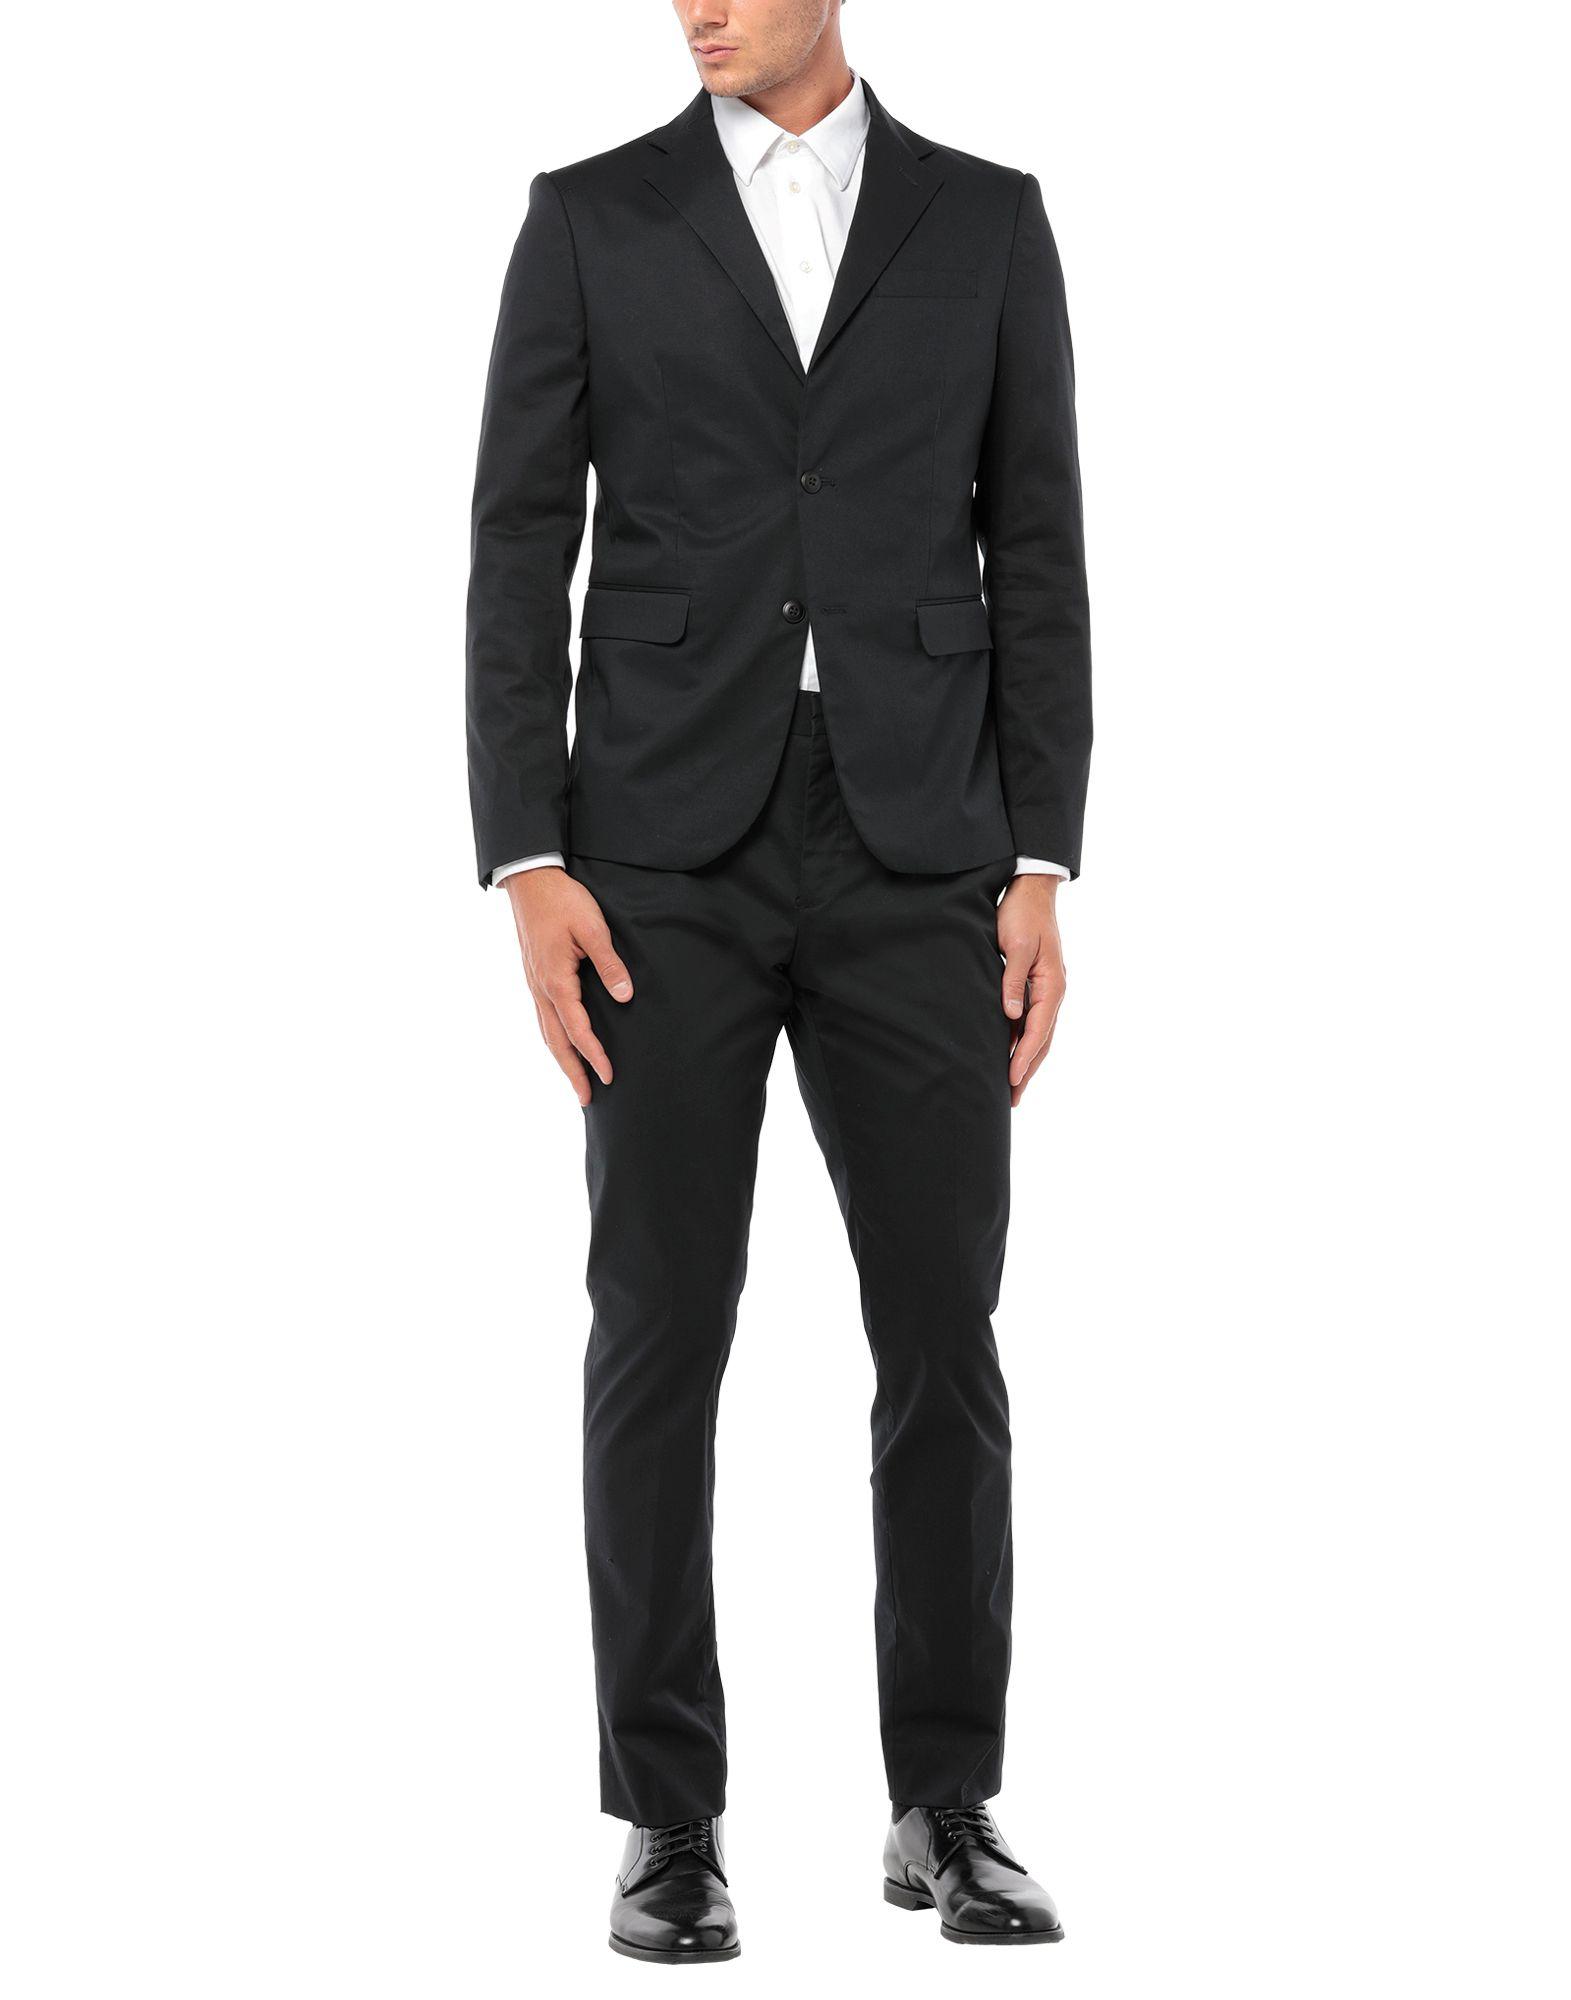 Marciano Suit in Black for Men - Lyst